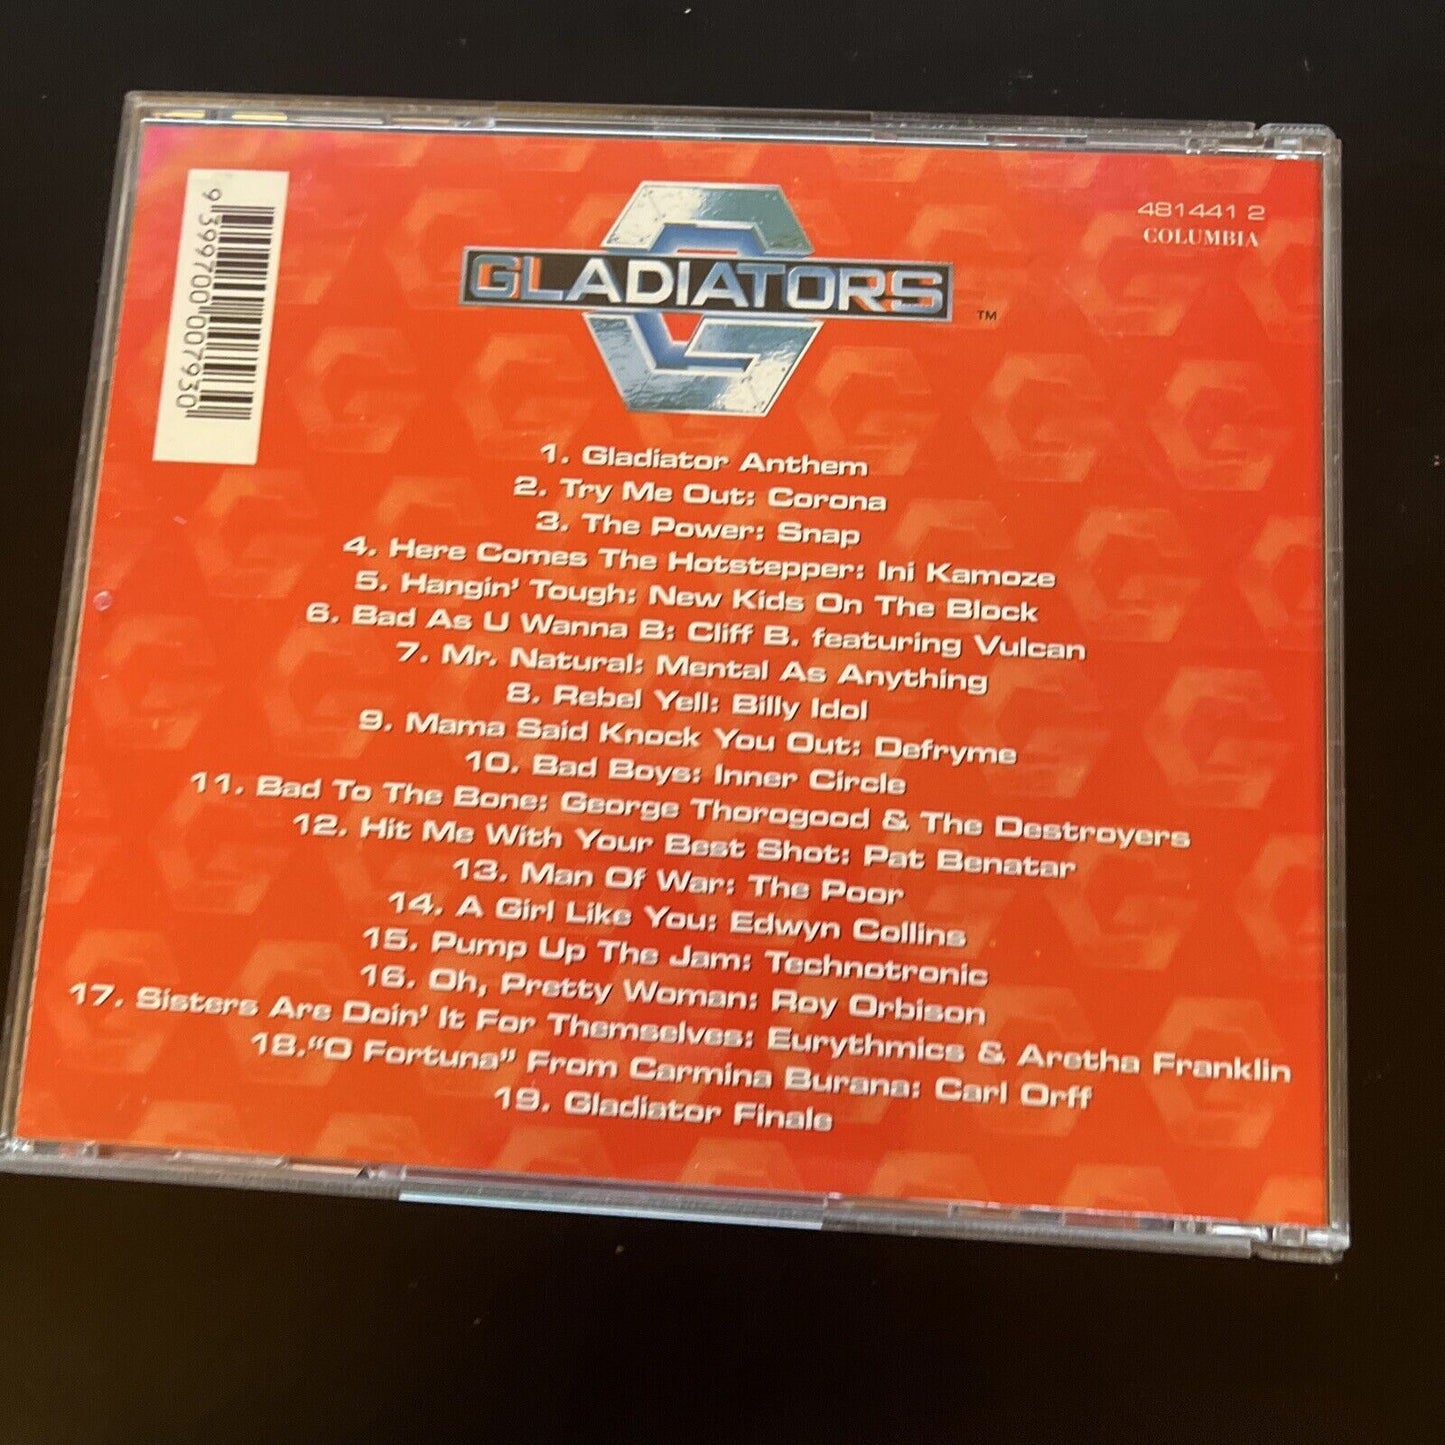 Gladiators - Australian TV Show Soundtrack (CD, 1995)